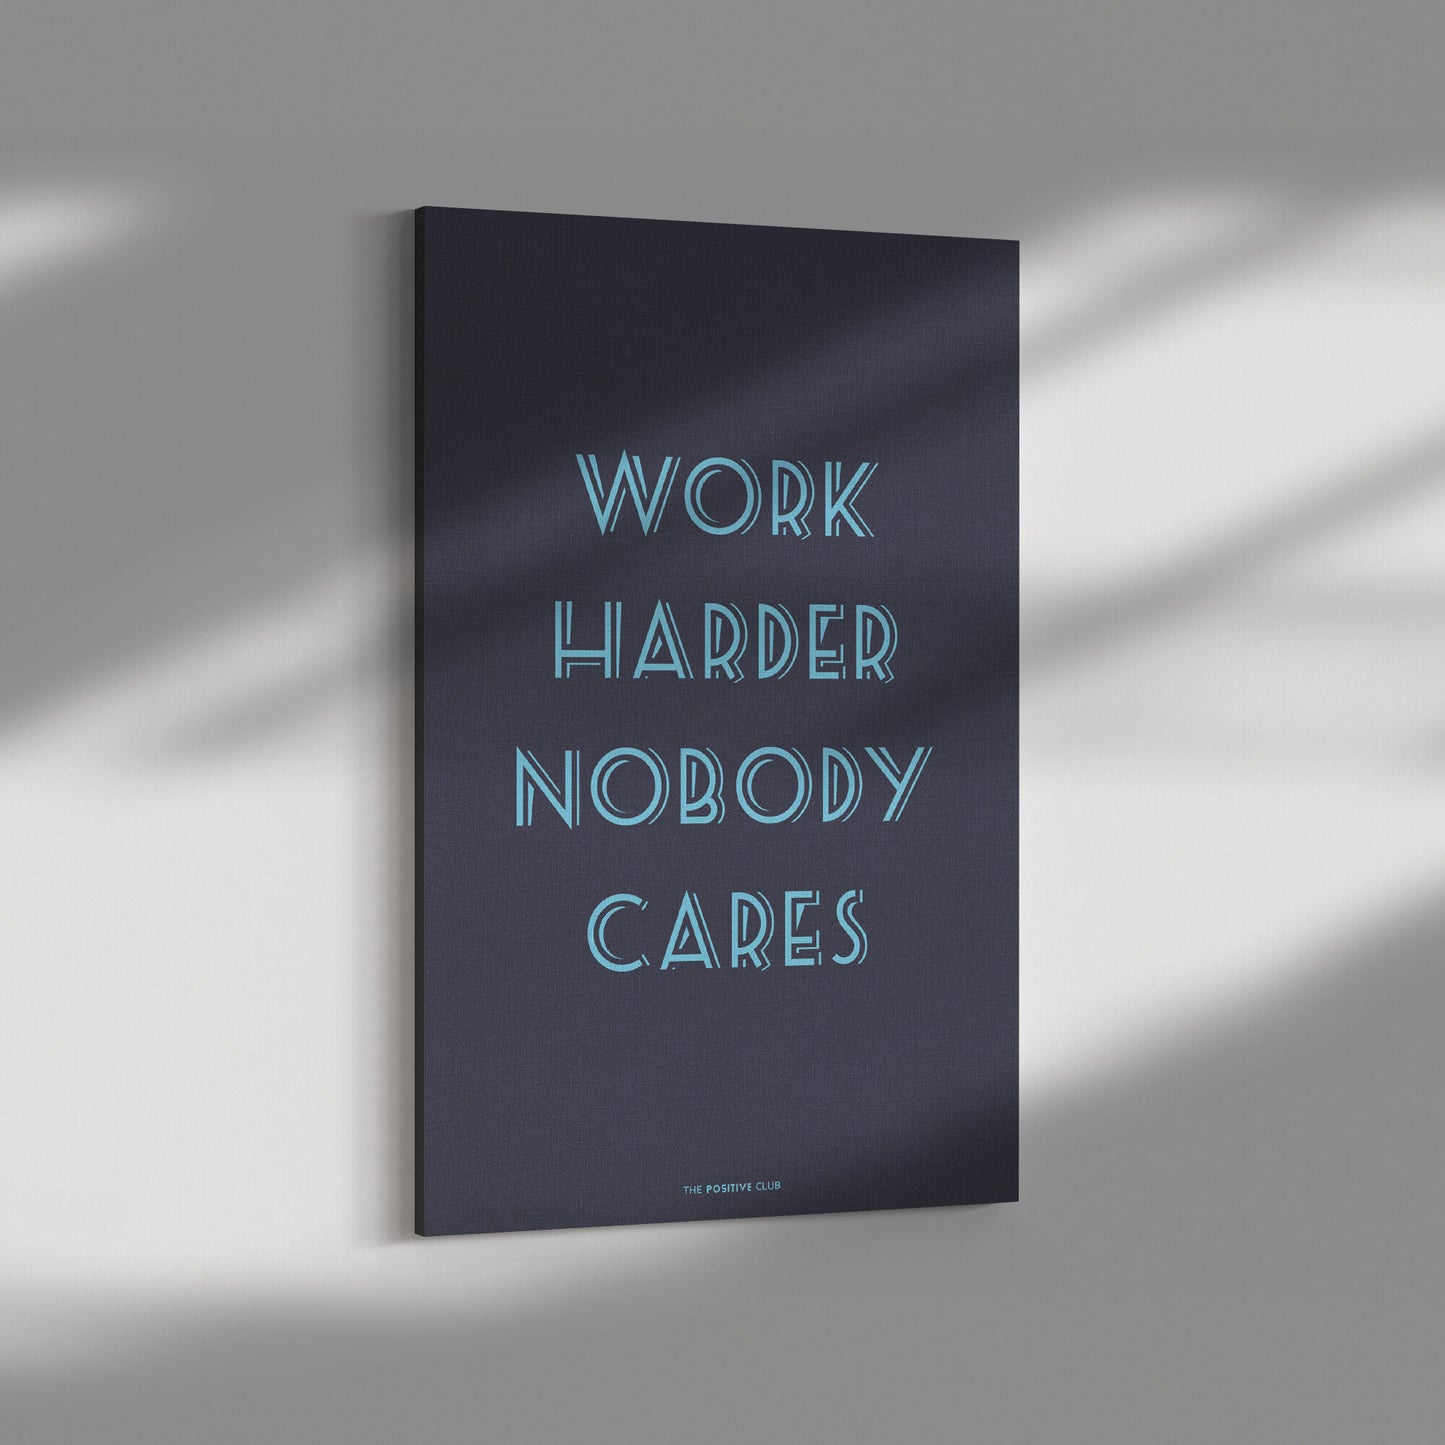 WORK HARDER NOBODY CARES